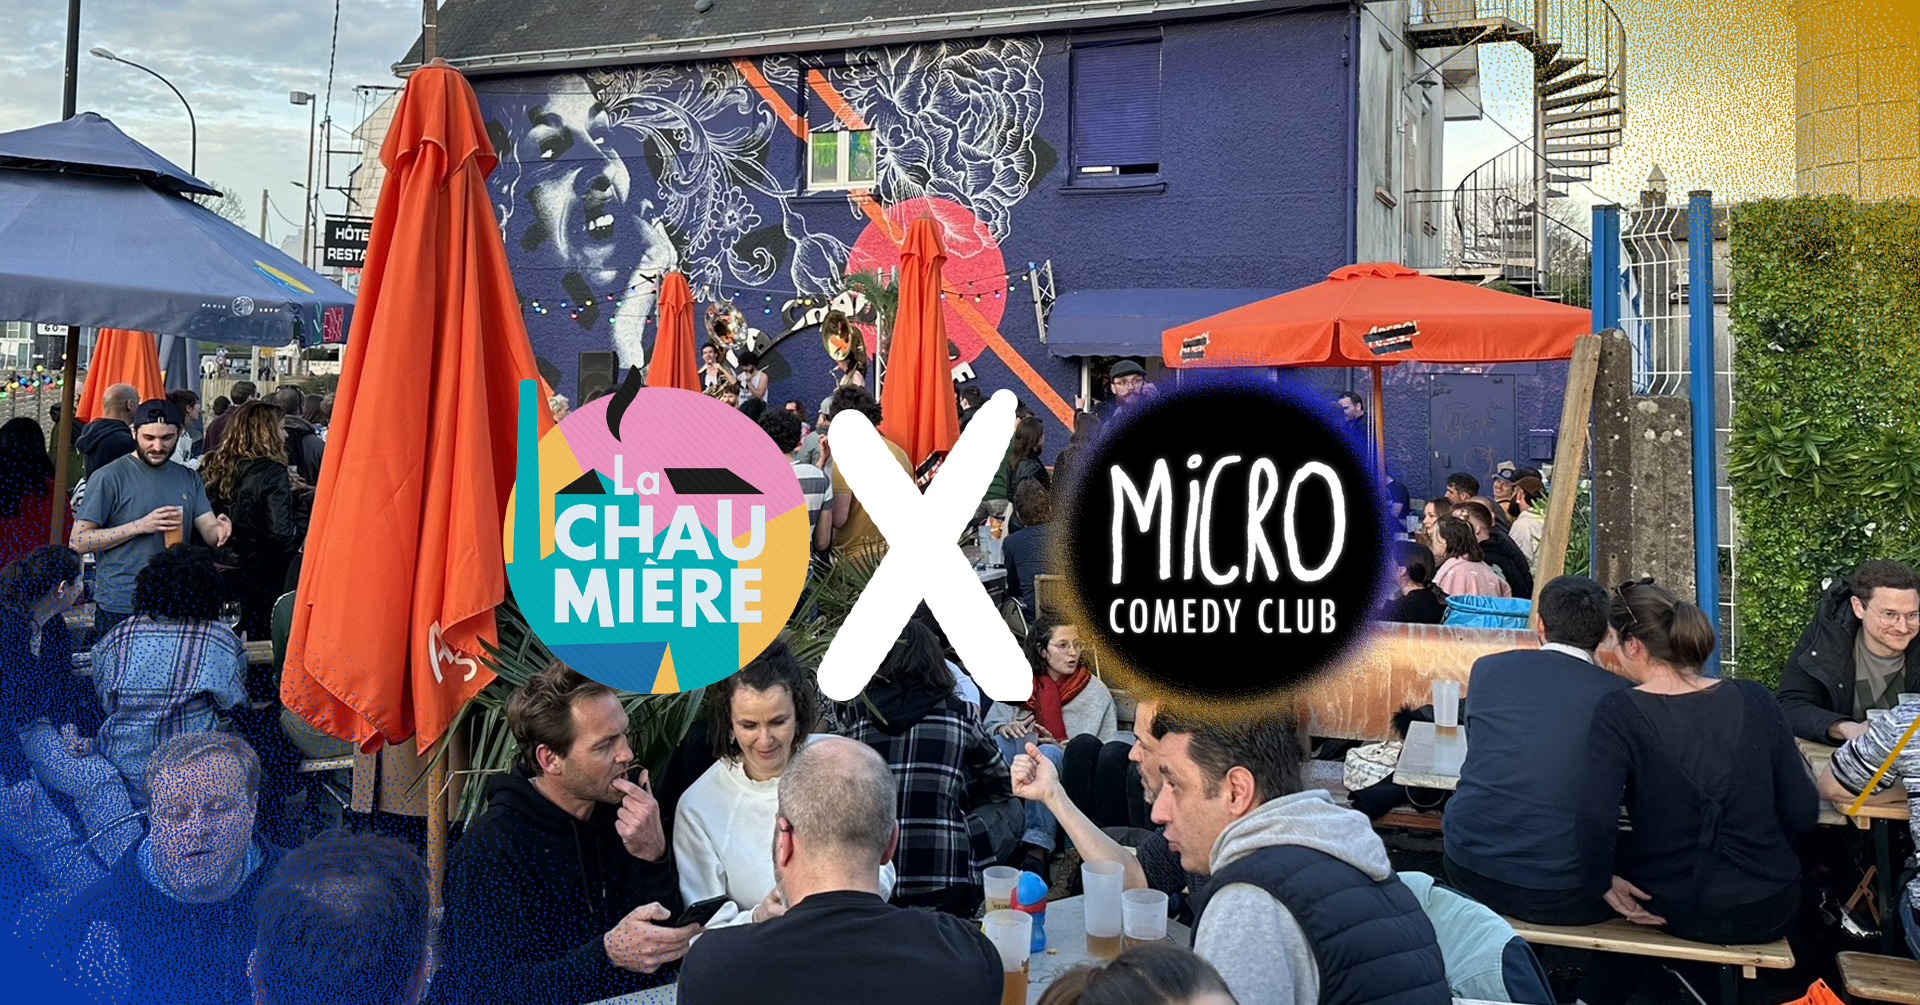 Le Micro Comedy Club à La Chaumière